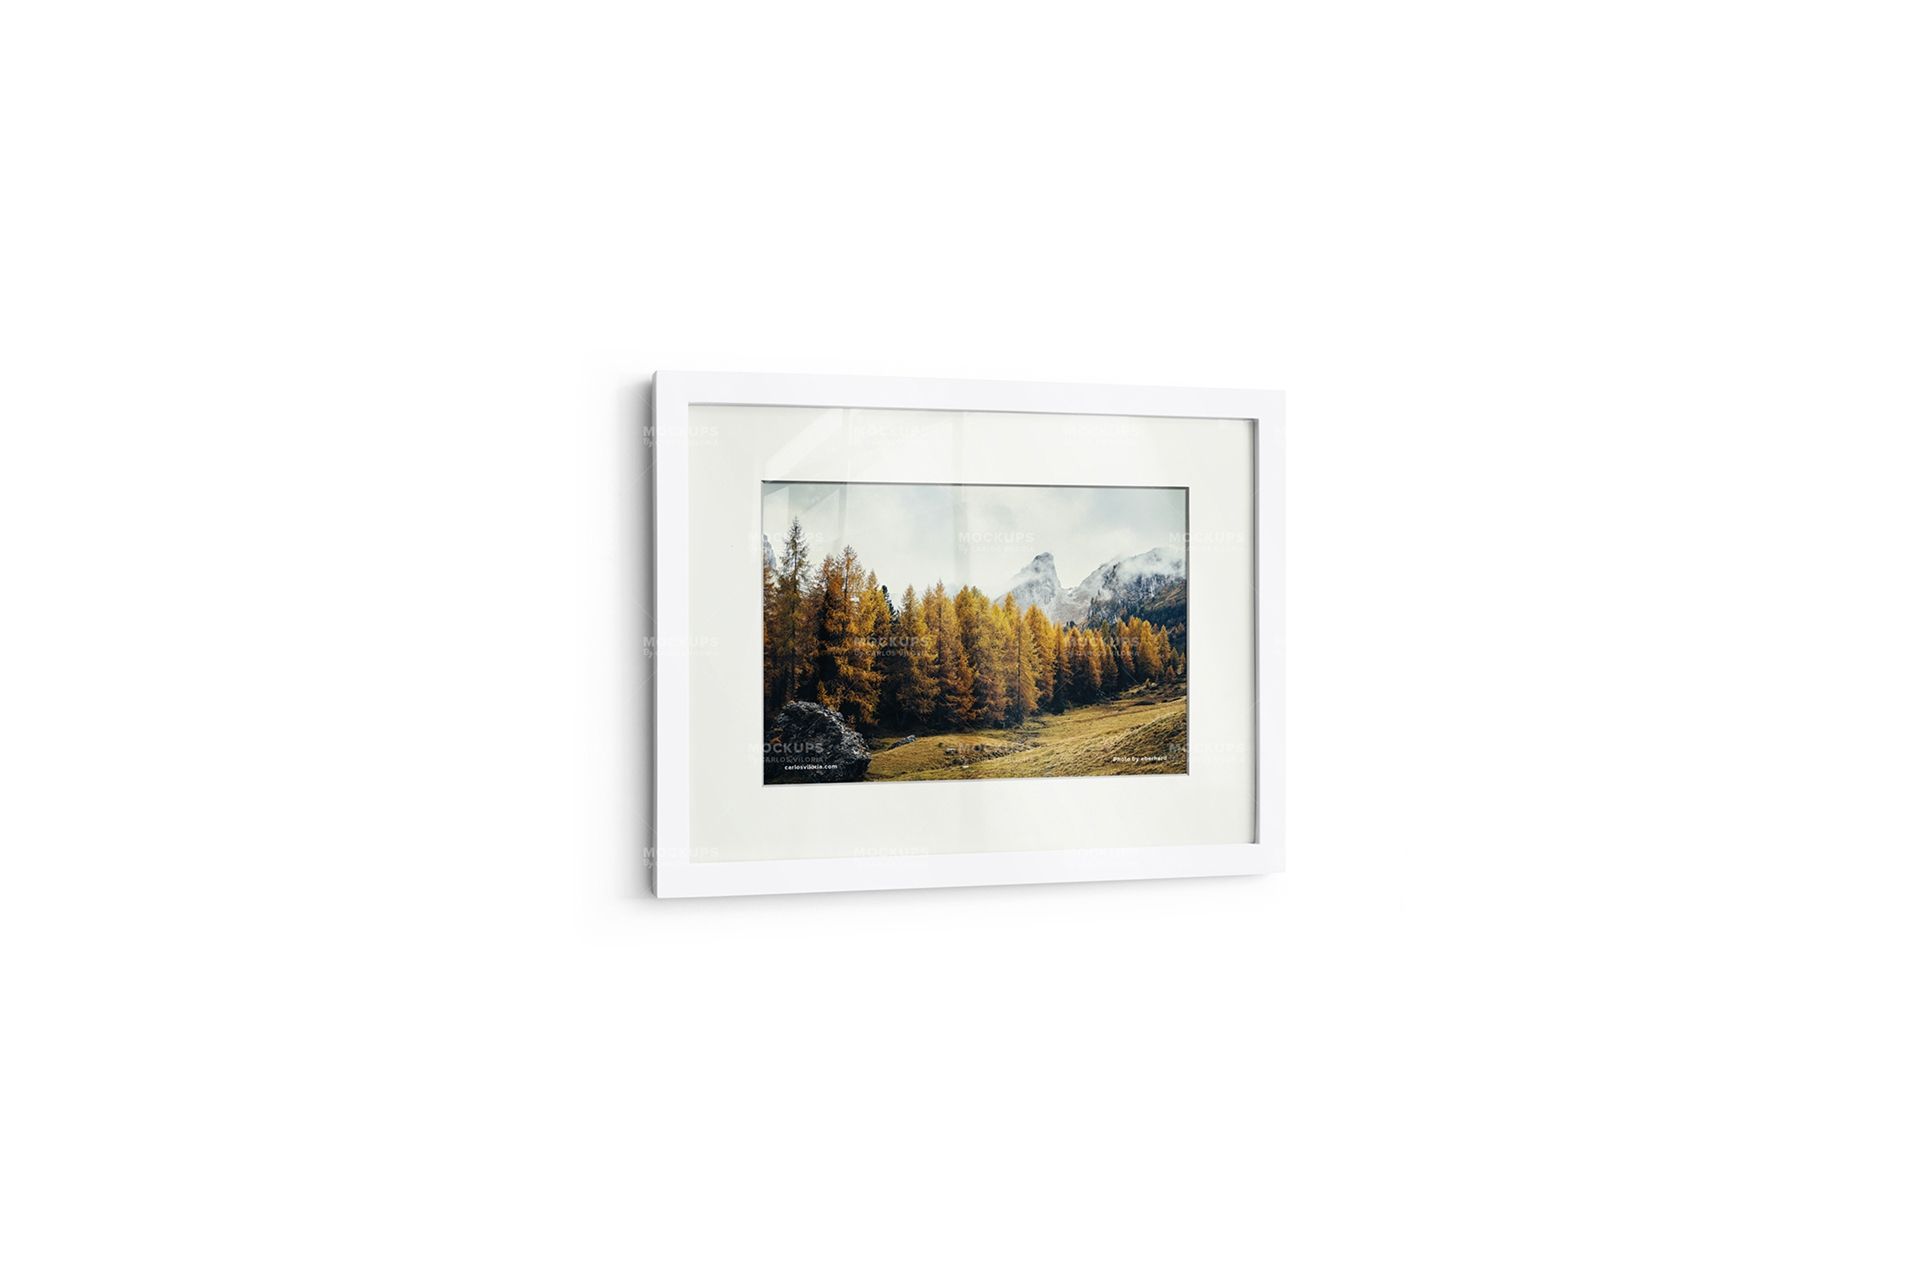 Landscape Frame Mockup – 40×30 cm by Carlos Viloria